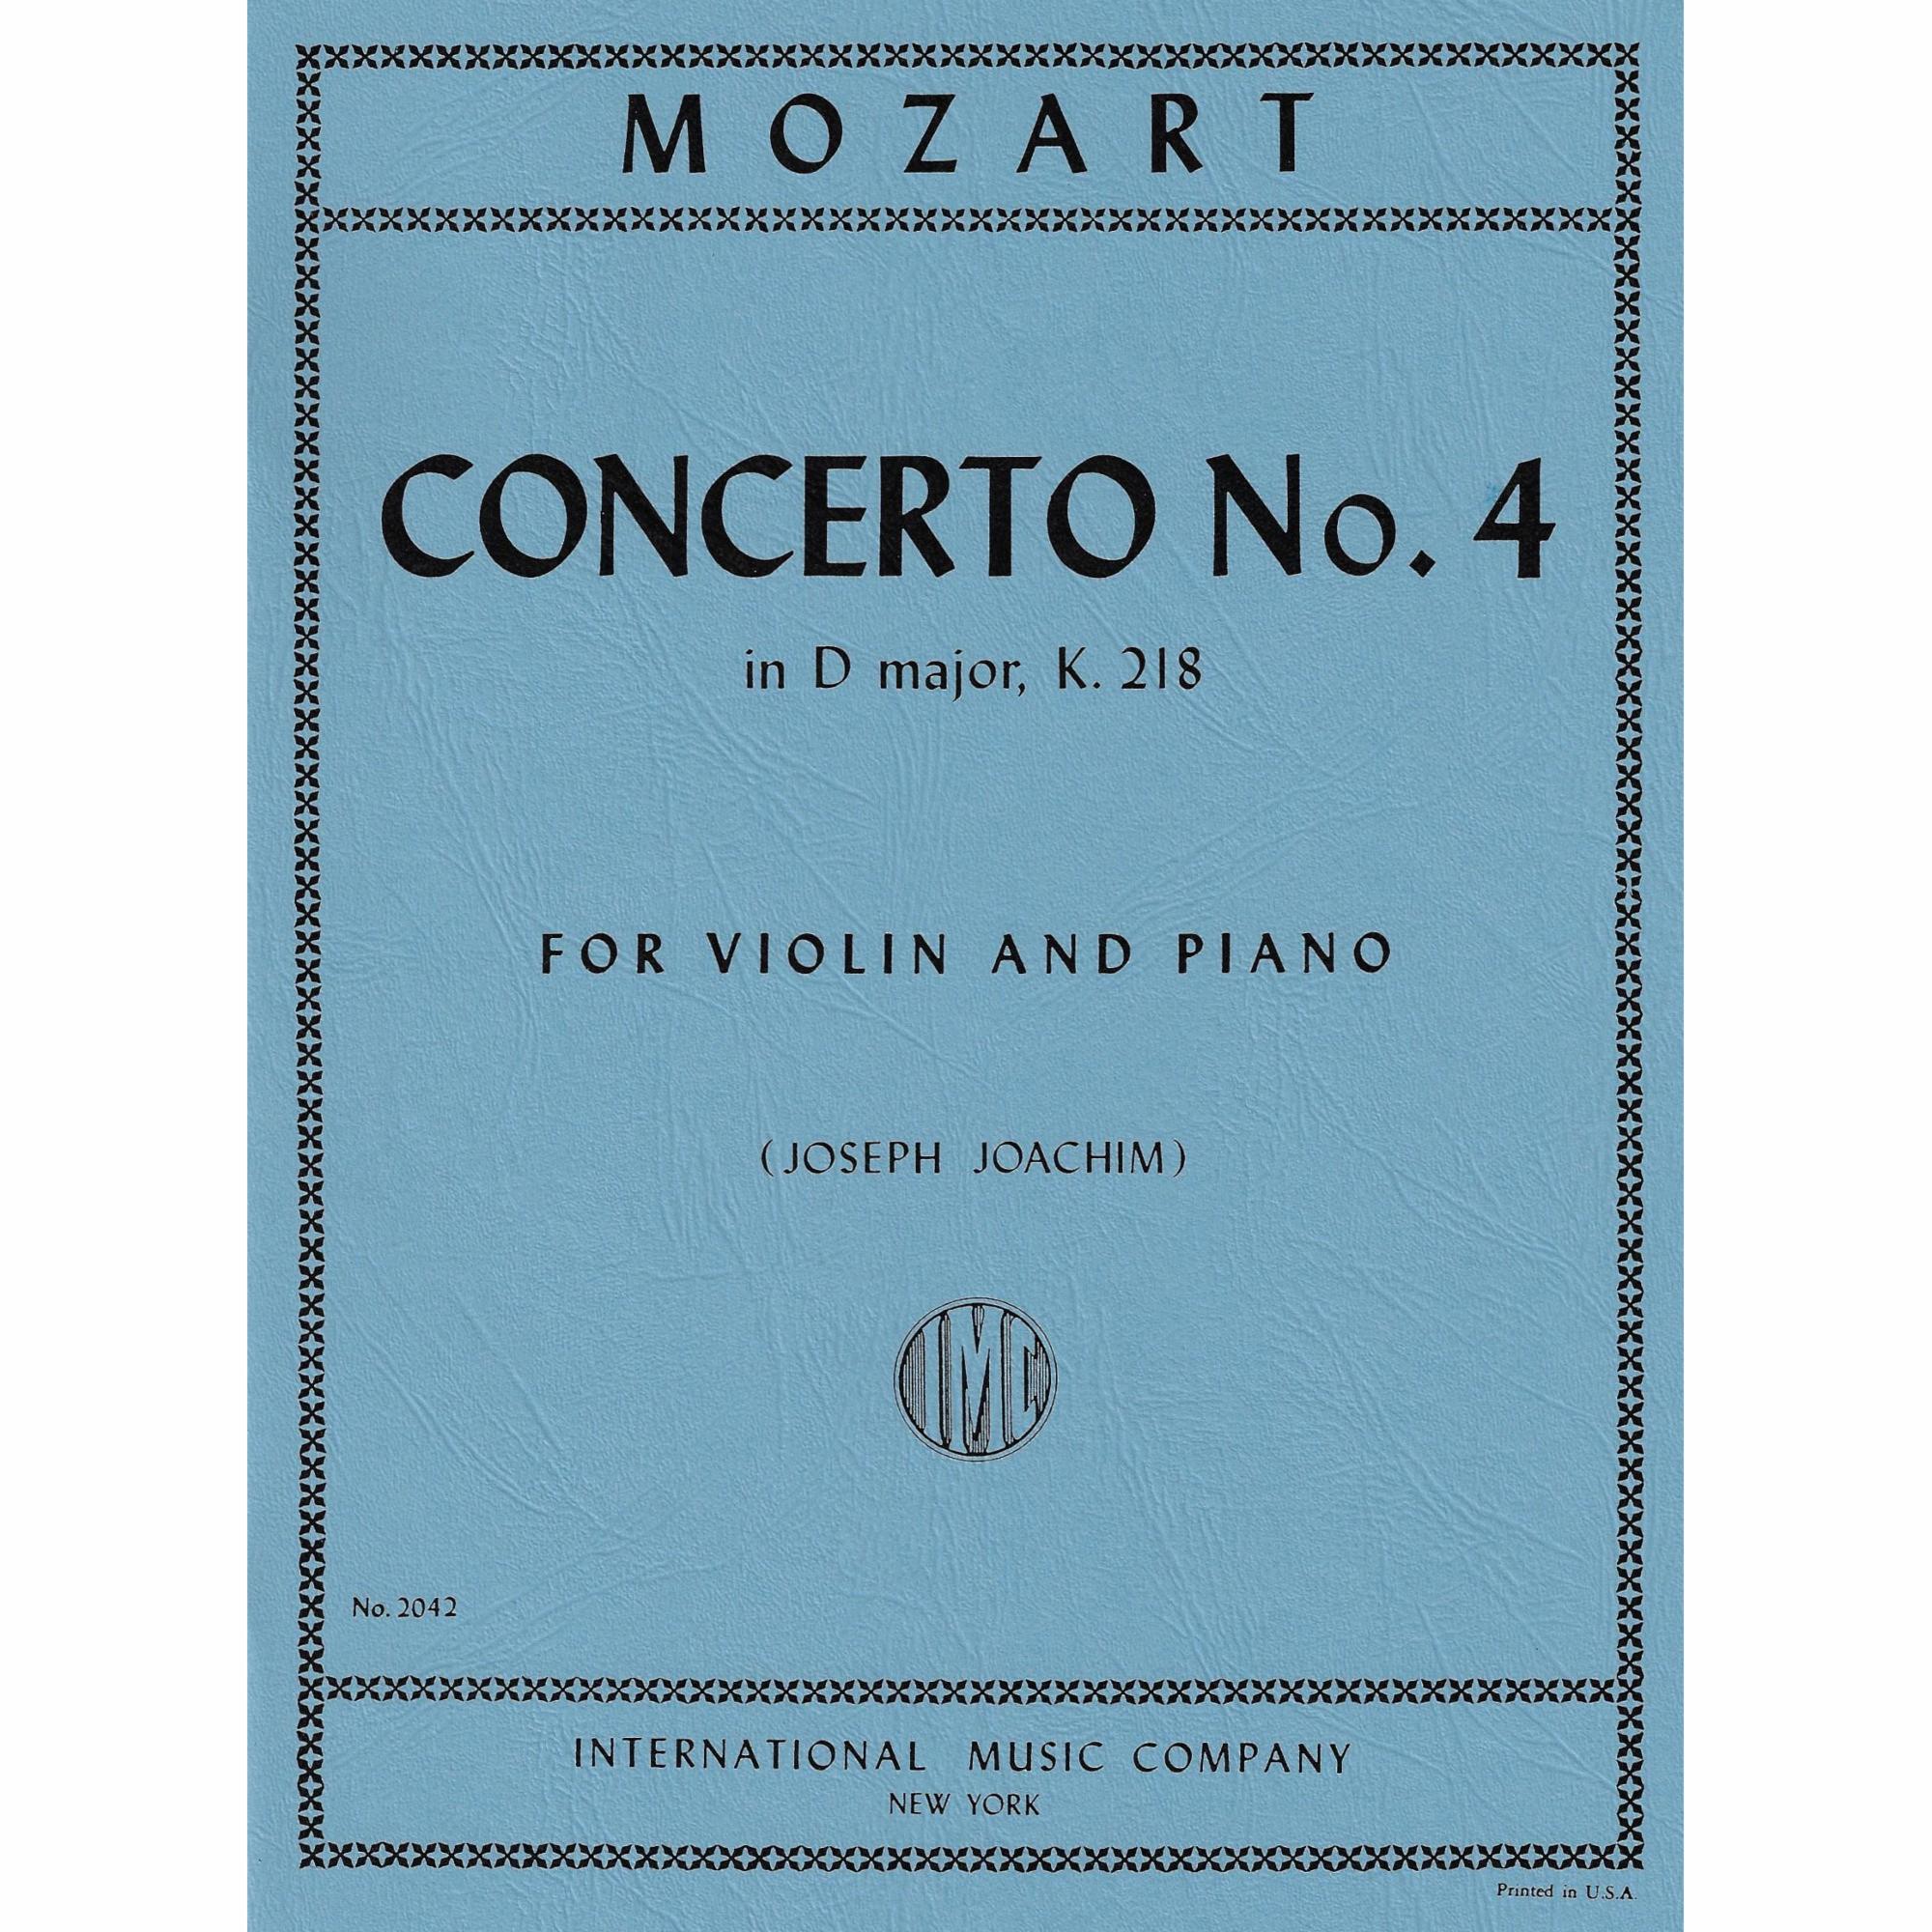 Mozart -- Concerto No. 4 in D Major, K. 218 for Violin and Piano